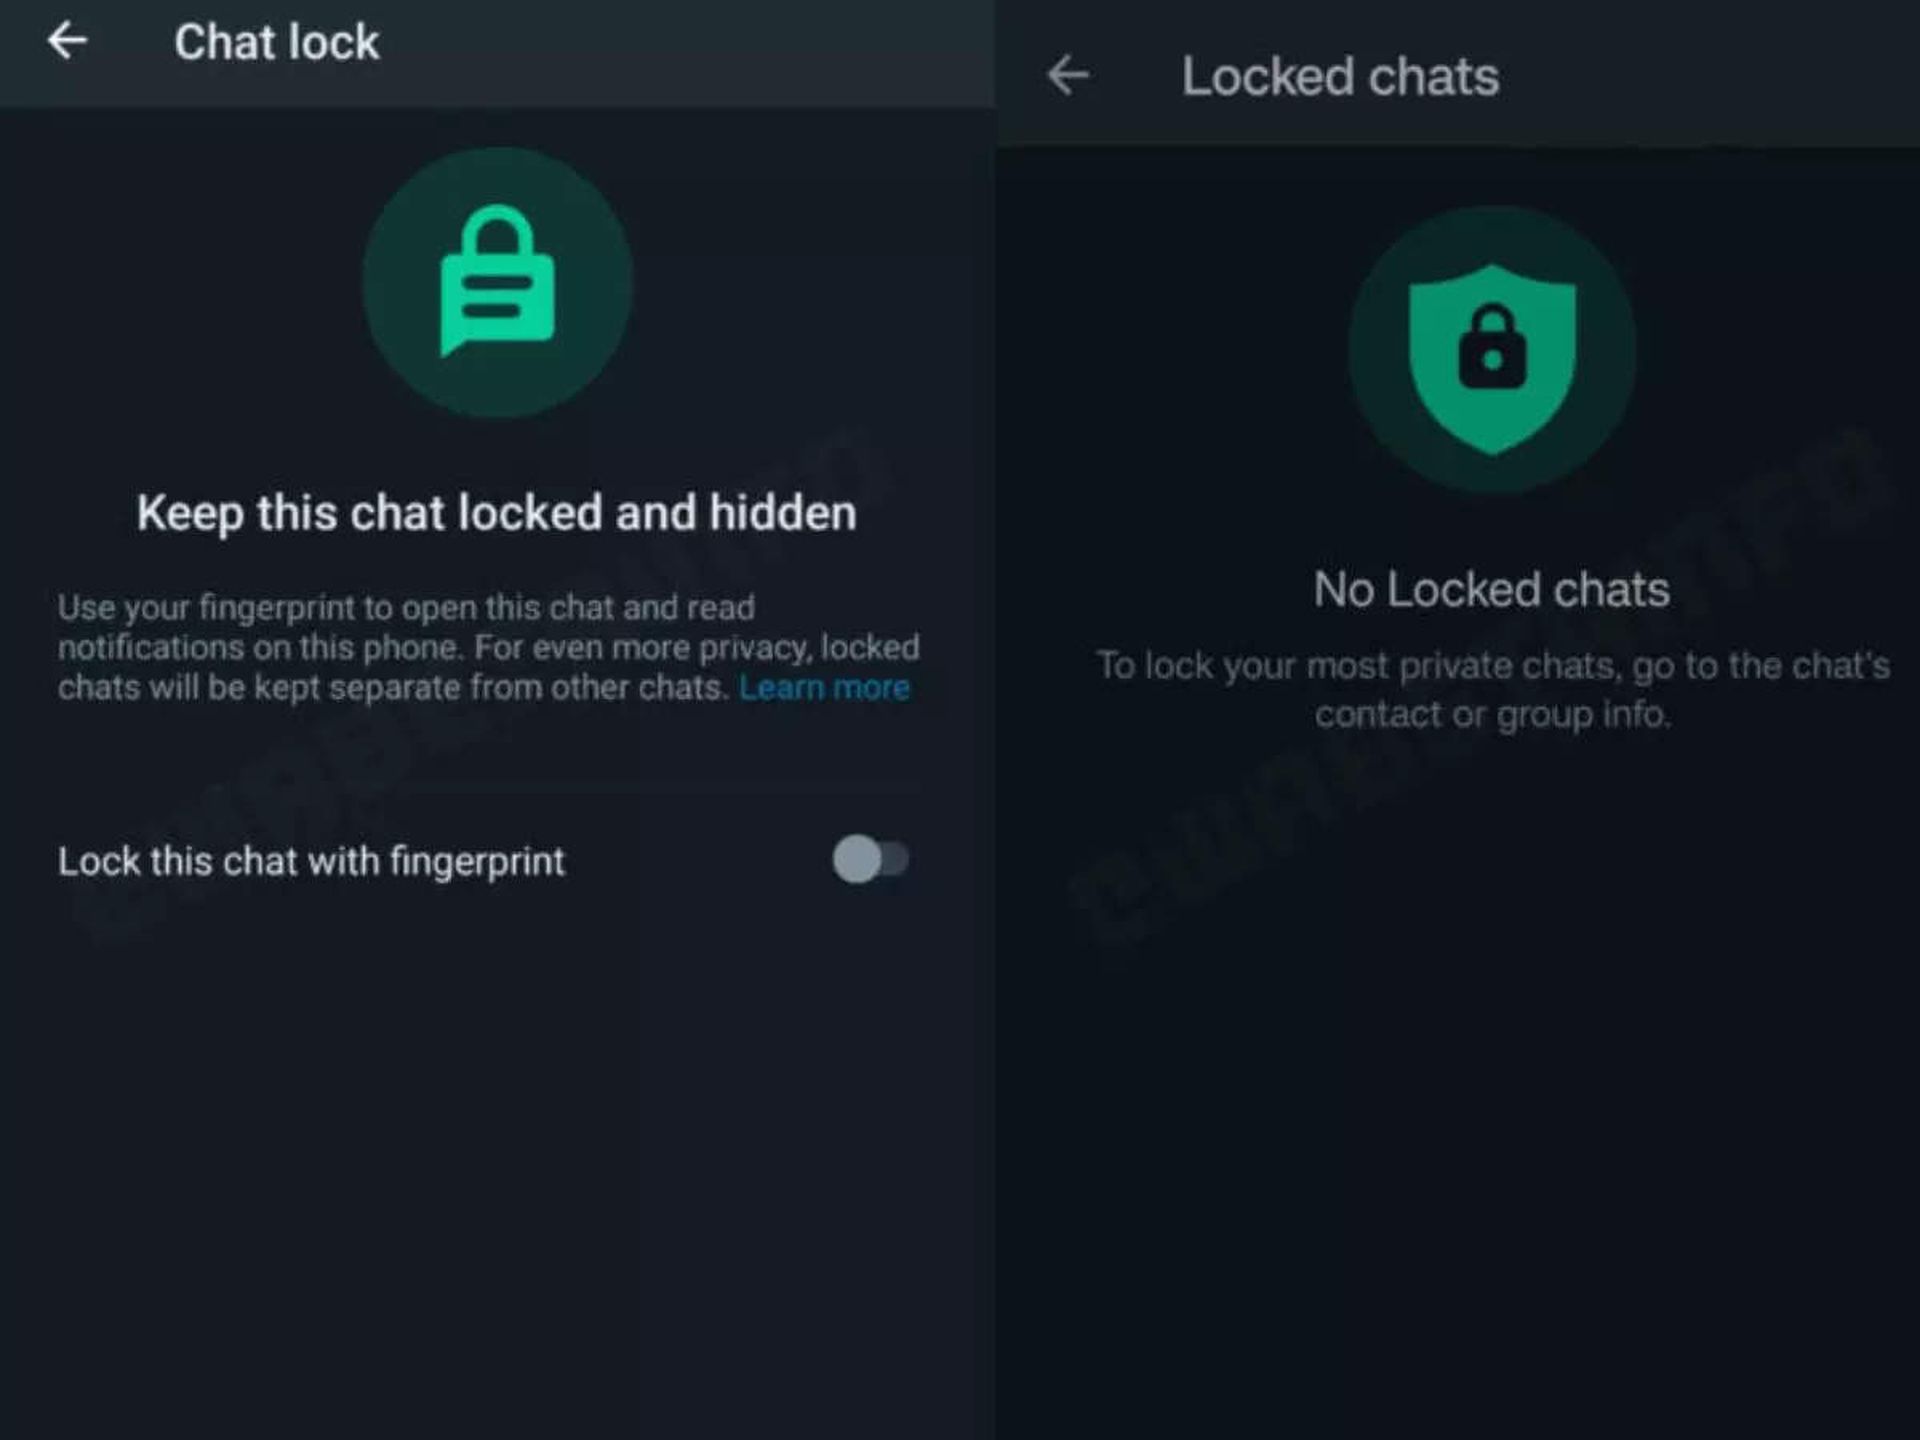 WhatsApp chat lock